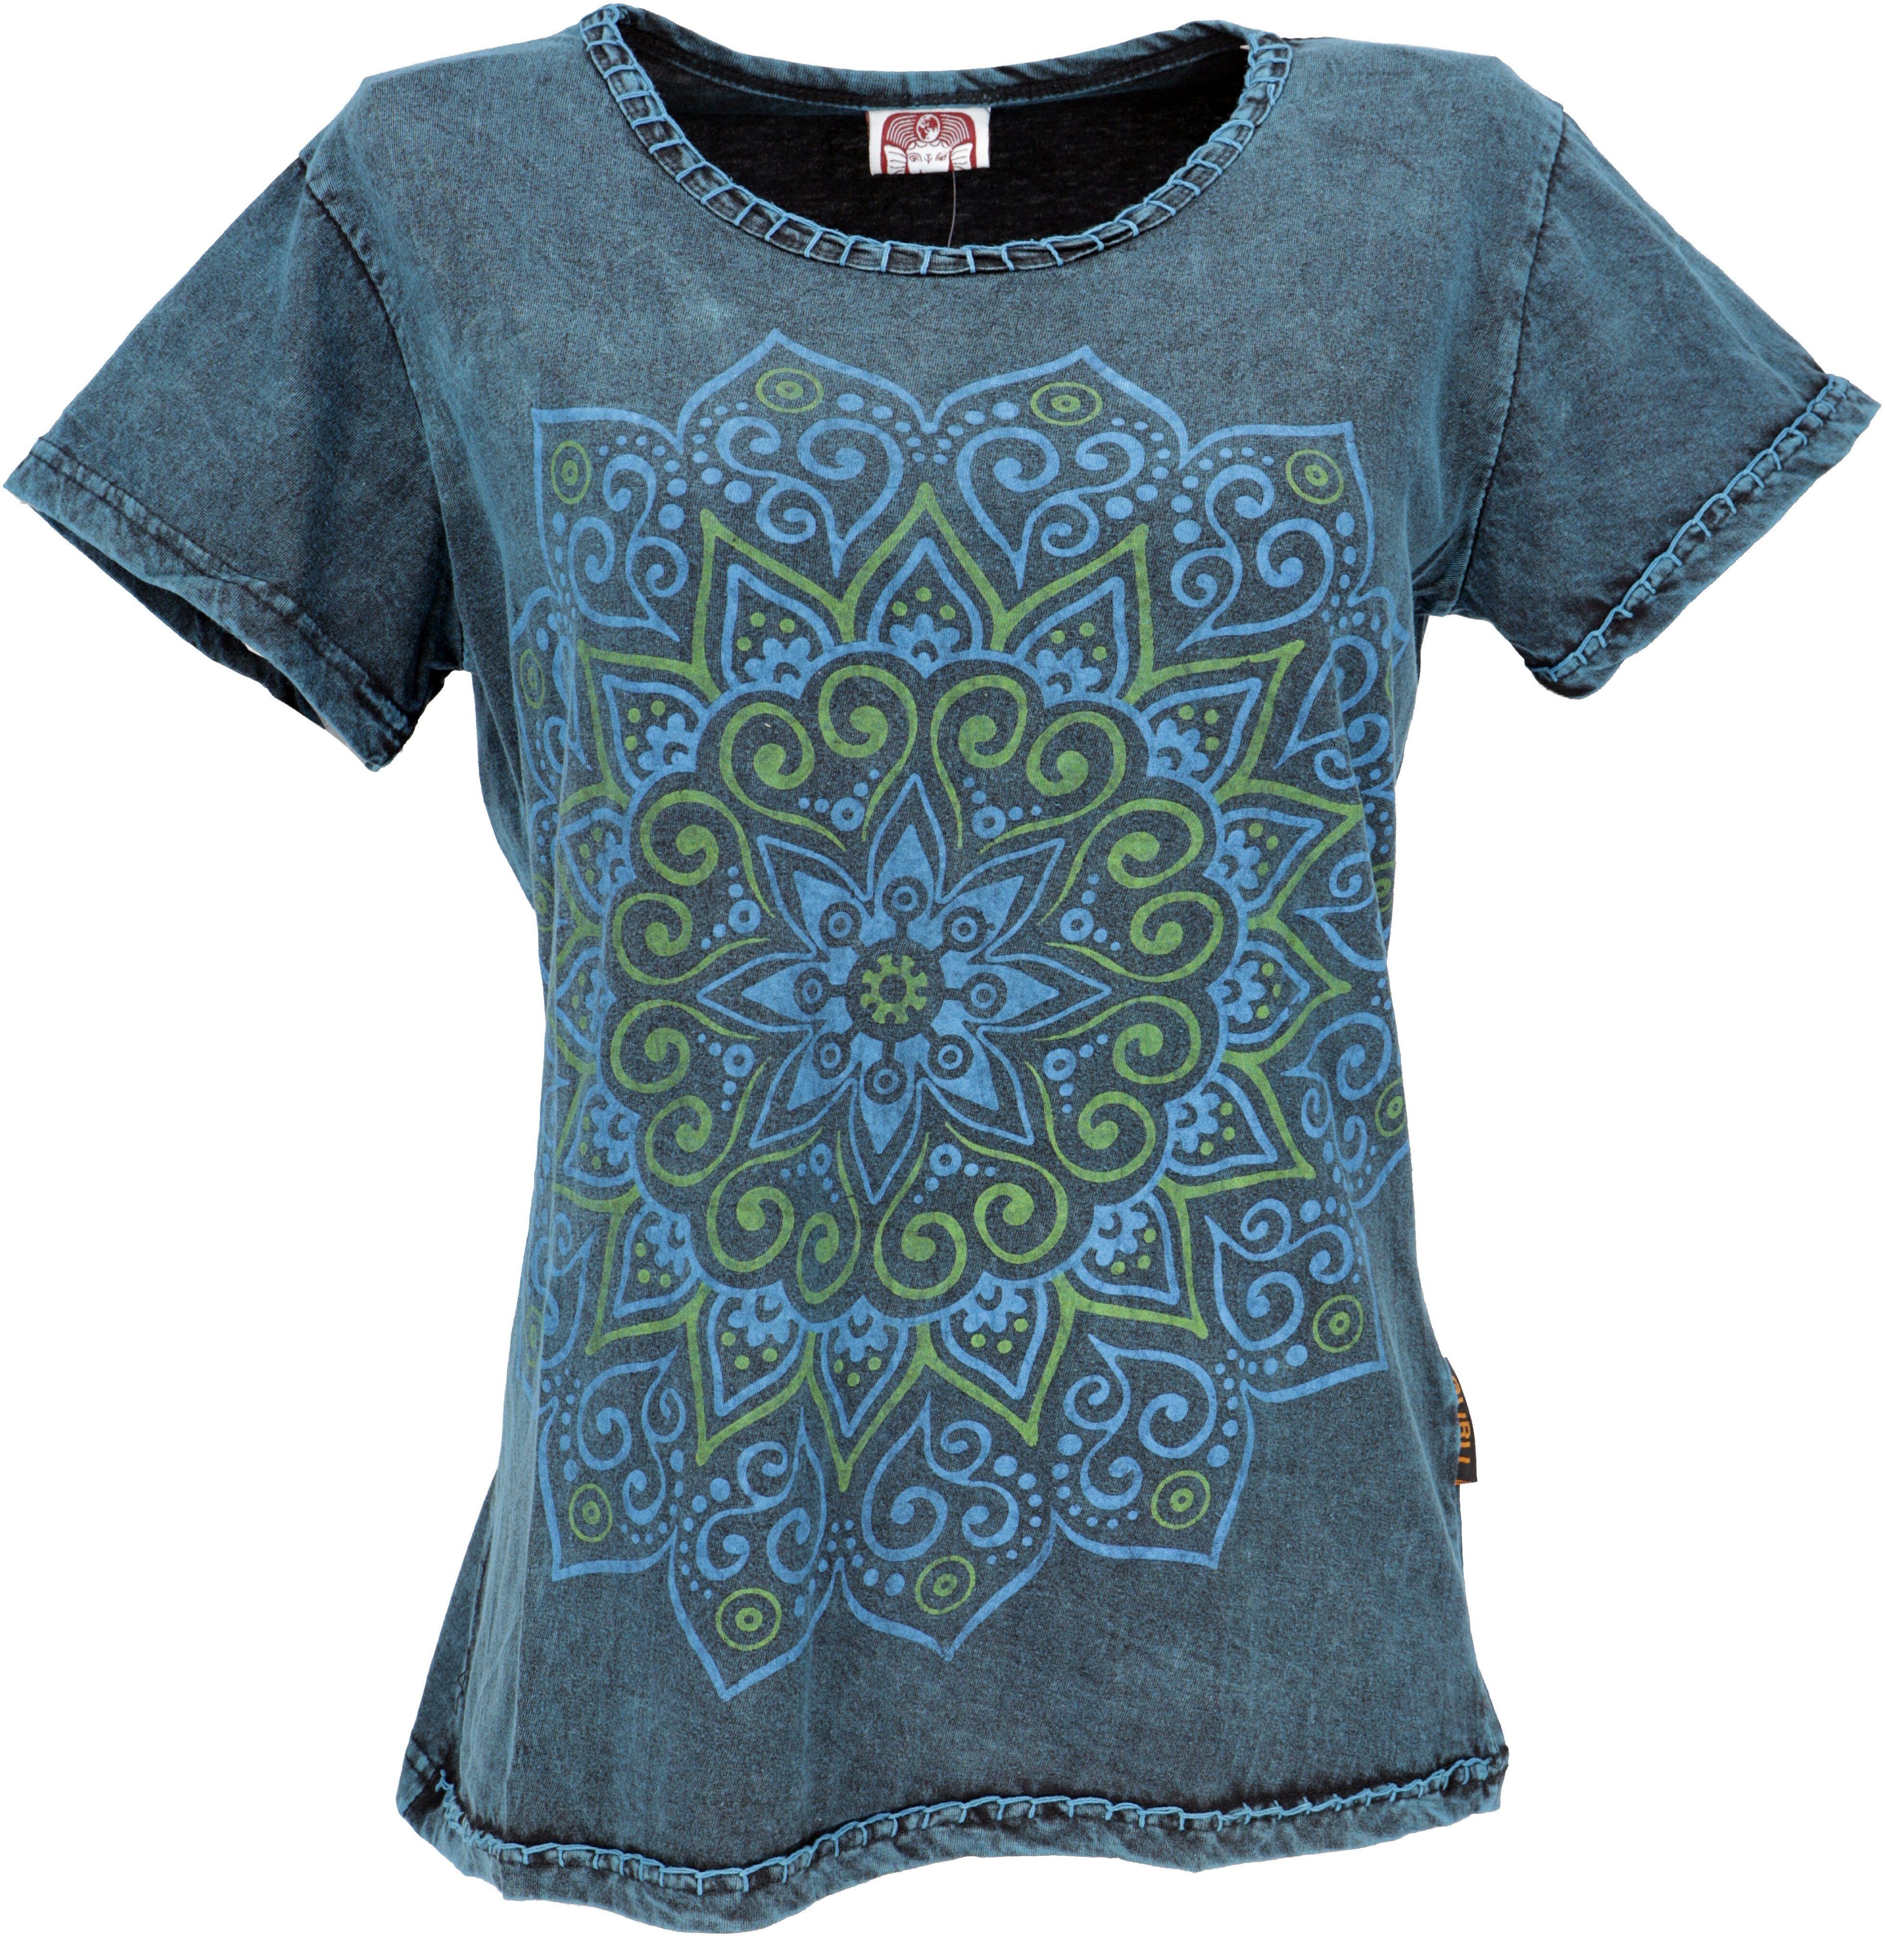 Guru-Shop T-Shirt Boho T-Shirt mit Mandaladruck, stonewashed.. Festival, Ethno Style, alternative Bekleidung